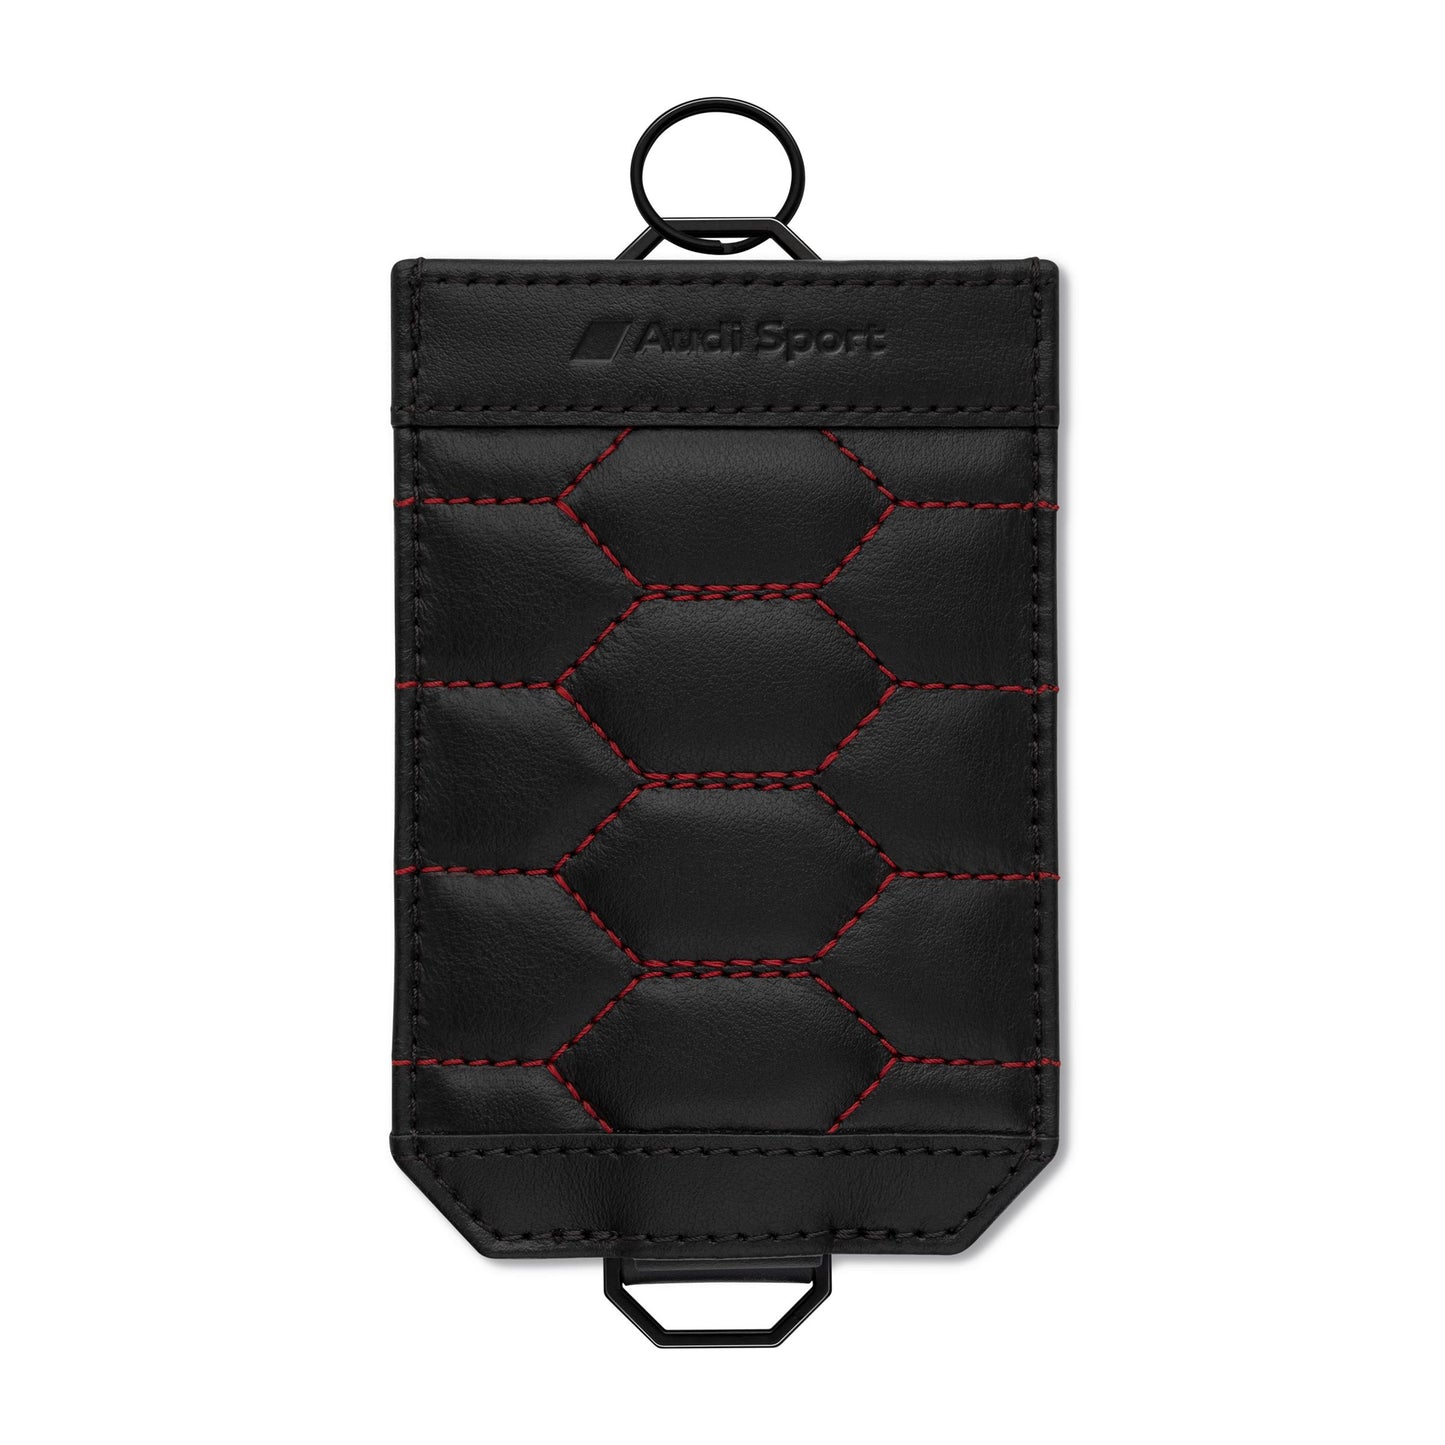 Audi Sport key case leather, black-red